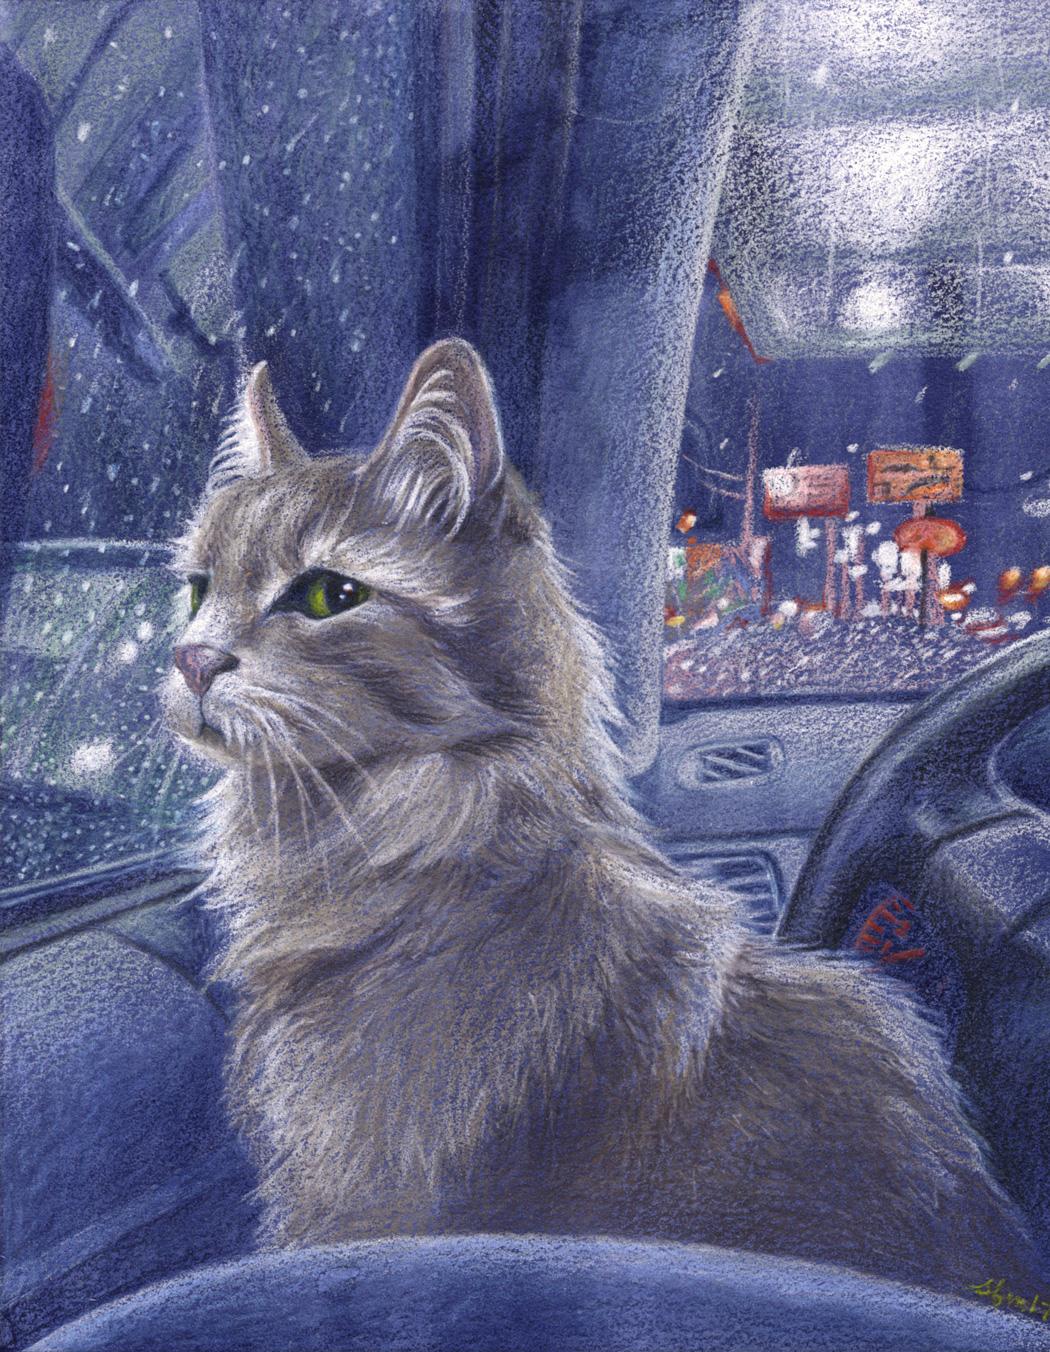 Cat kitty car Travel Transit Transition city lights night